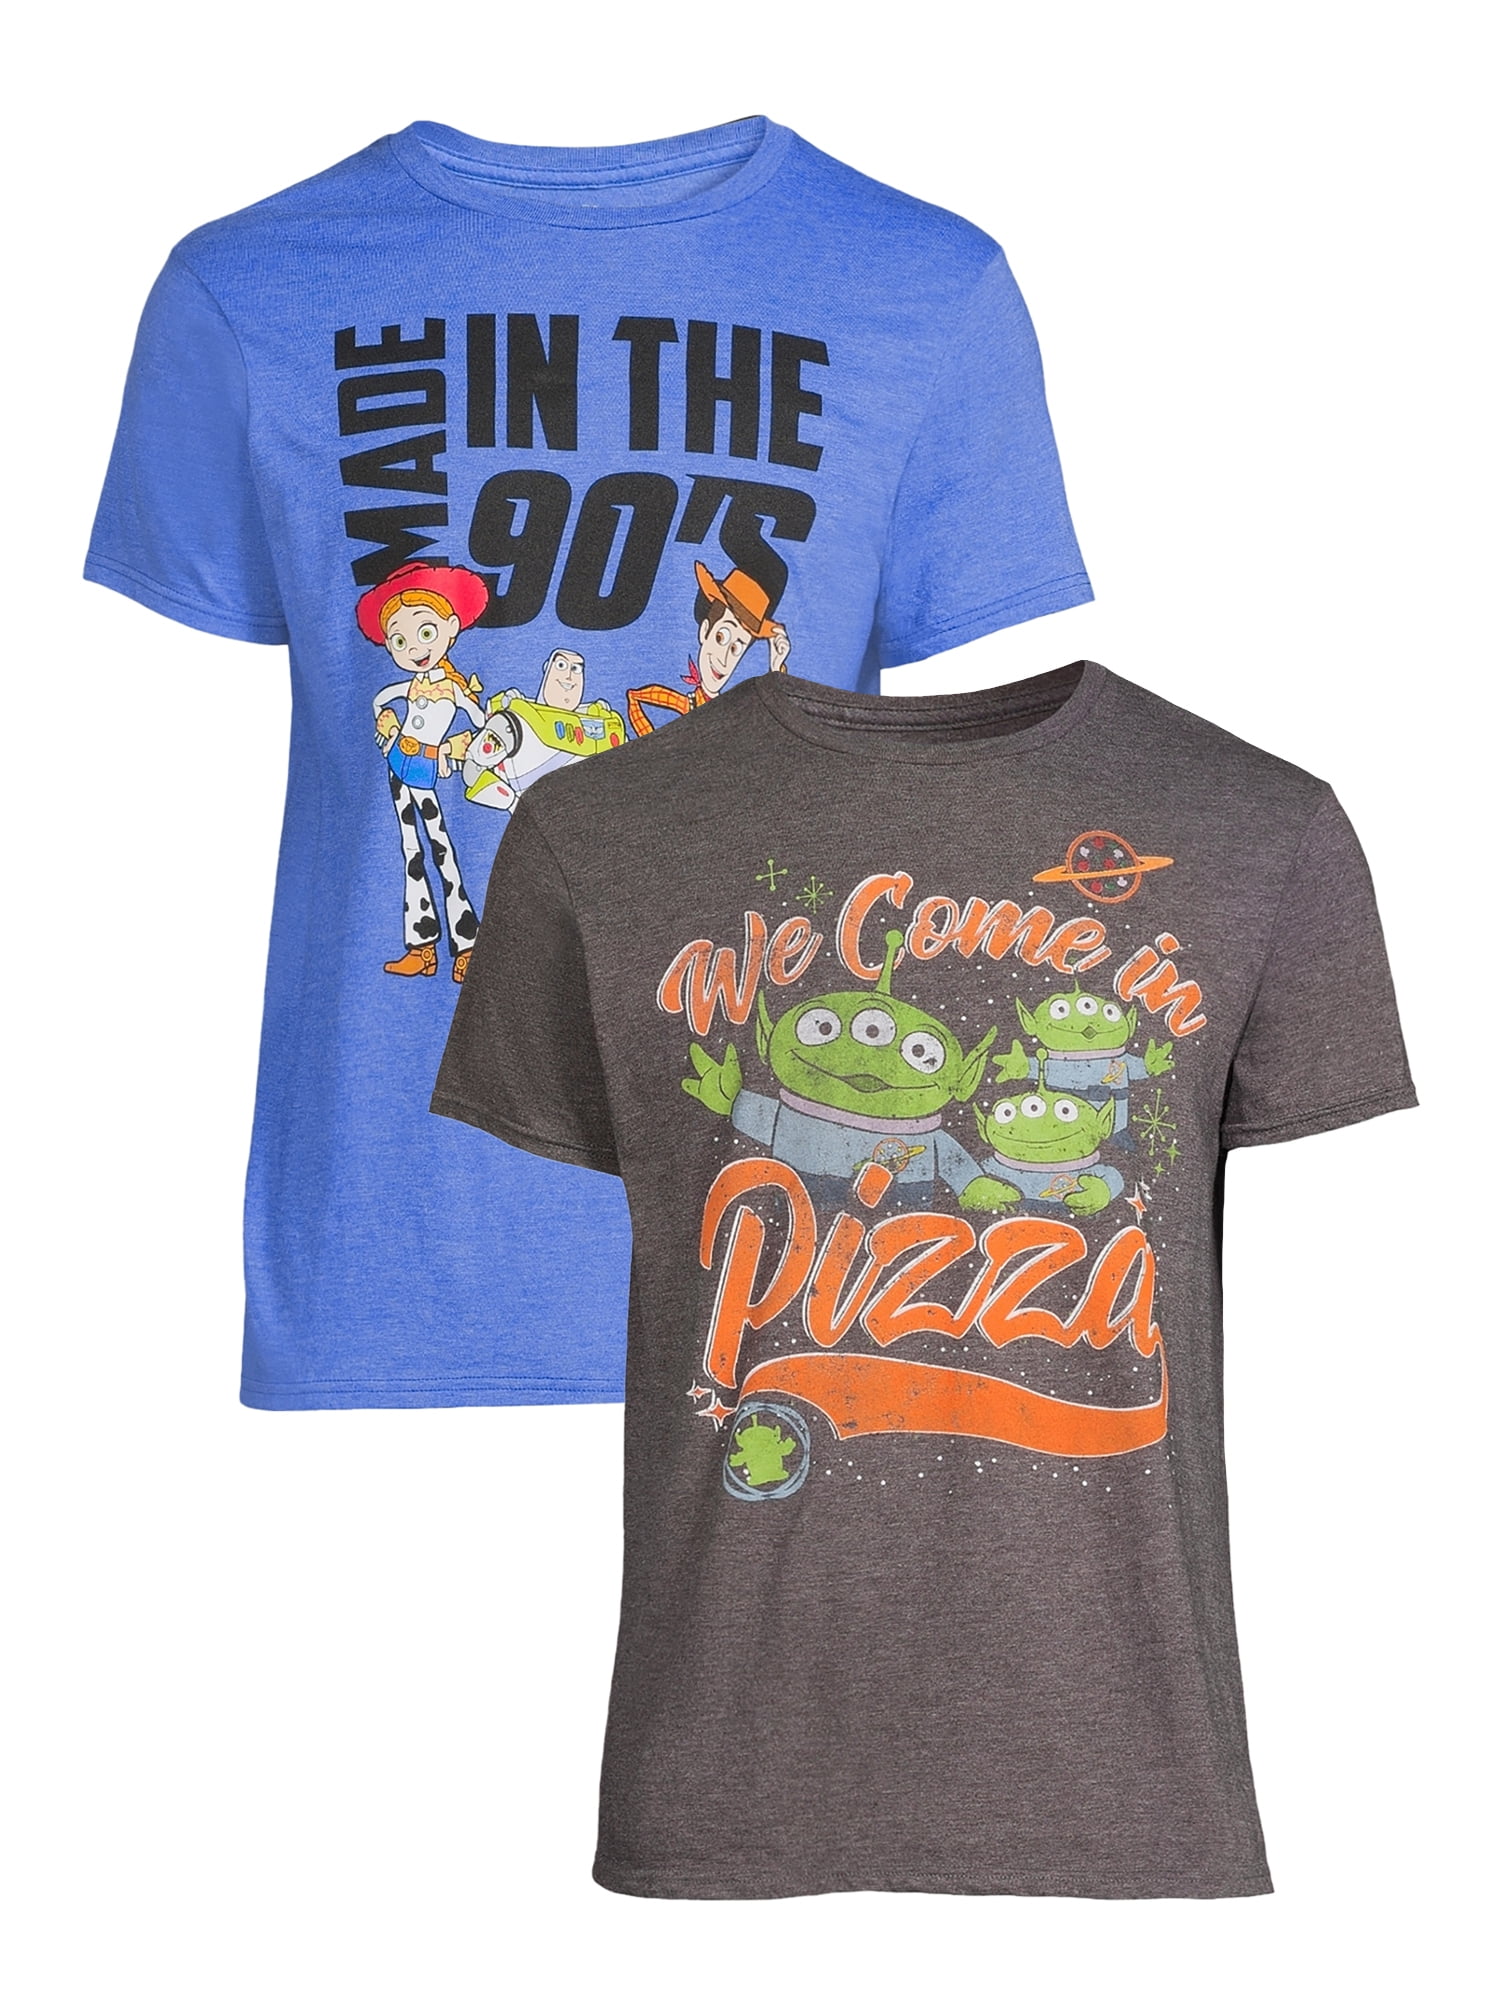 Toy Story Men's & Big Men's 90's & Pizza Graphic T-shirt, 2-Pack, Sizes  S-3XL